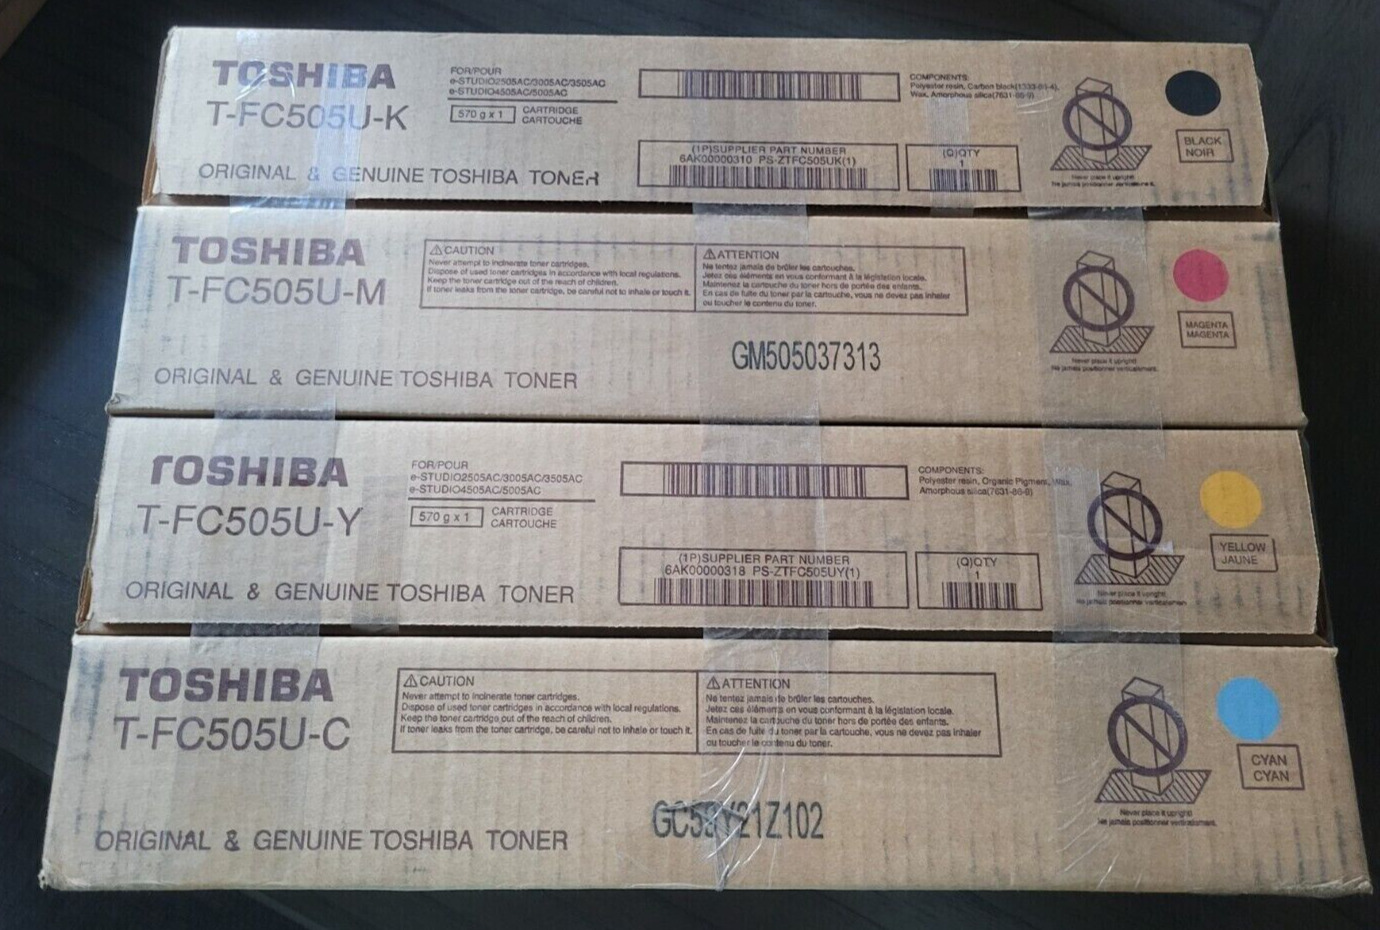 Full SET of 4 TOSHIBA T-FC505U-K/C/M/Y Toner Cartridges FREE UPS SHIPPING